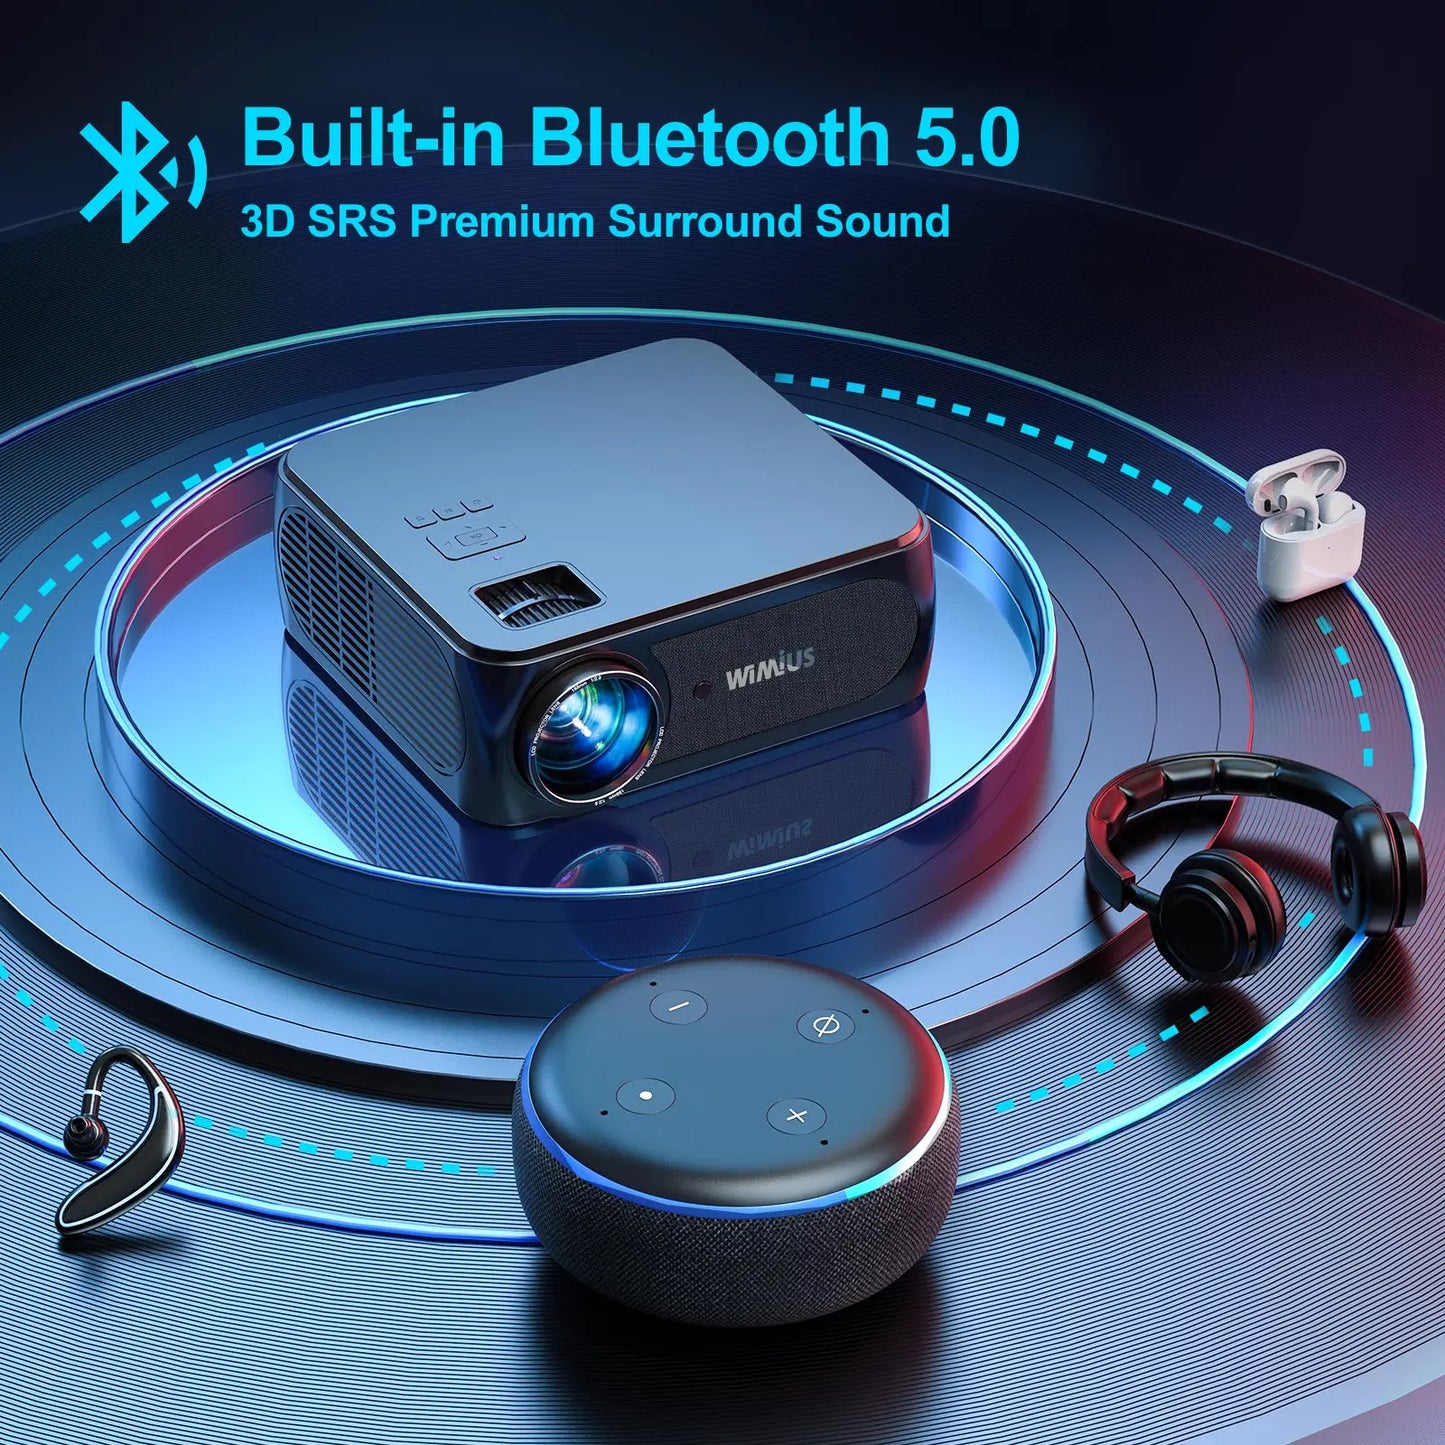 sofia ☘️ K8 4K Projectors 5G WiFi Bluetooth Full HD Projector Native 1080p 15000 Contrast 4P/4D Keystone Outdoor Video Projector